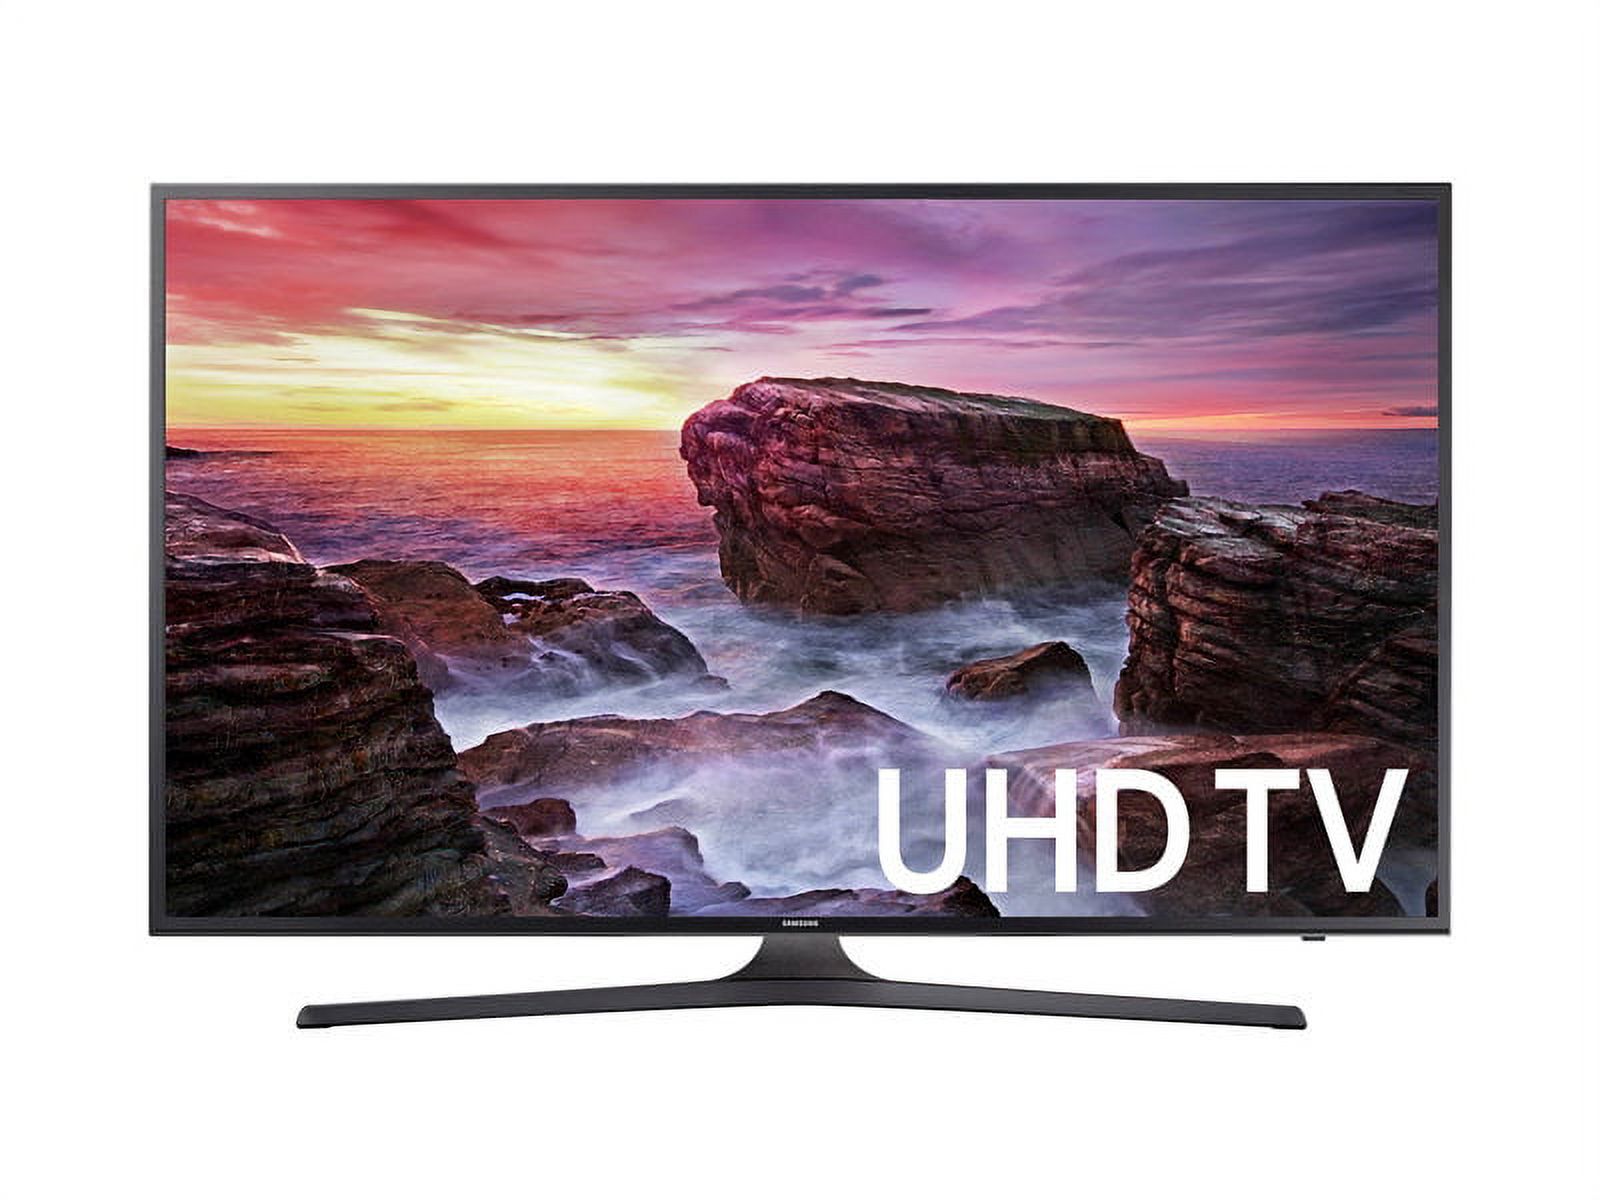 Restored Samsung 55" Class 4K (2160P) Smart LED TV (UN55MU6290FXZA) (Refurbished) - image 1 of 5